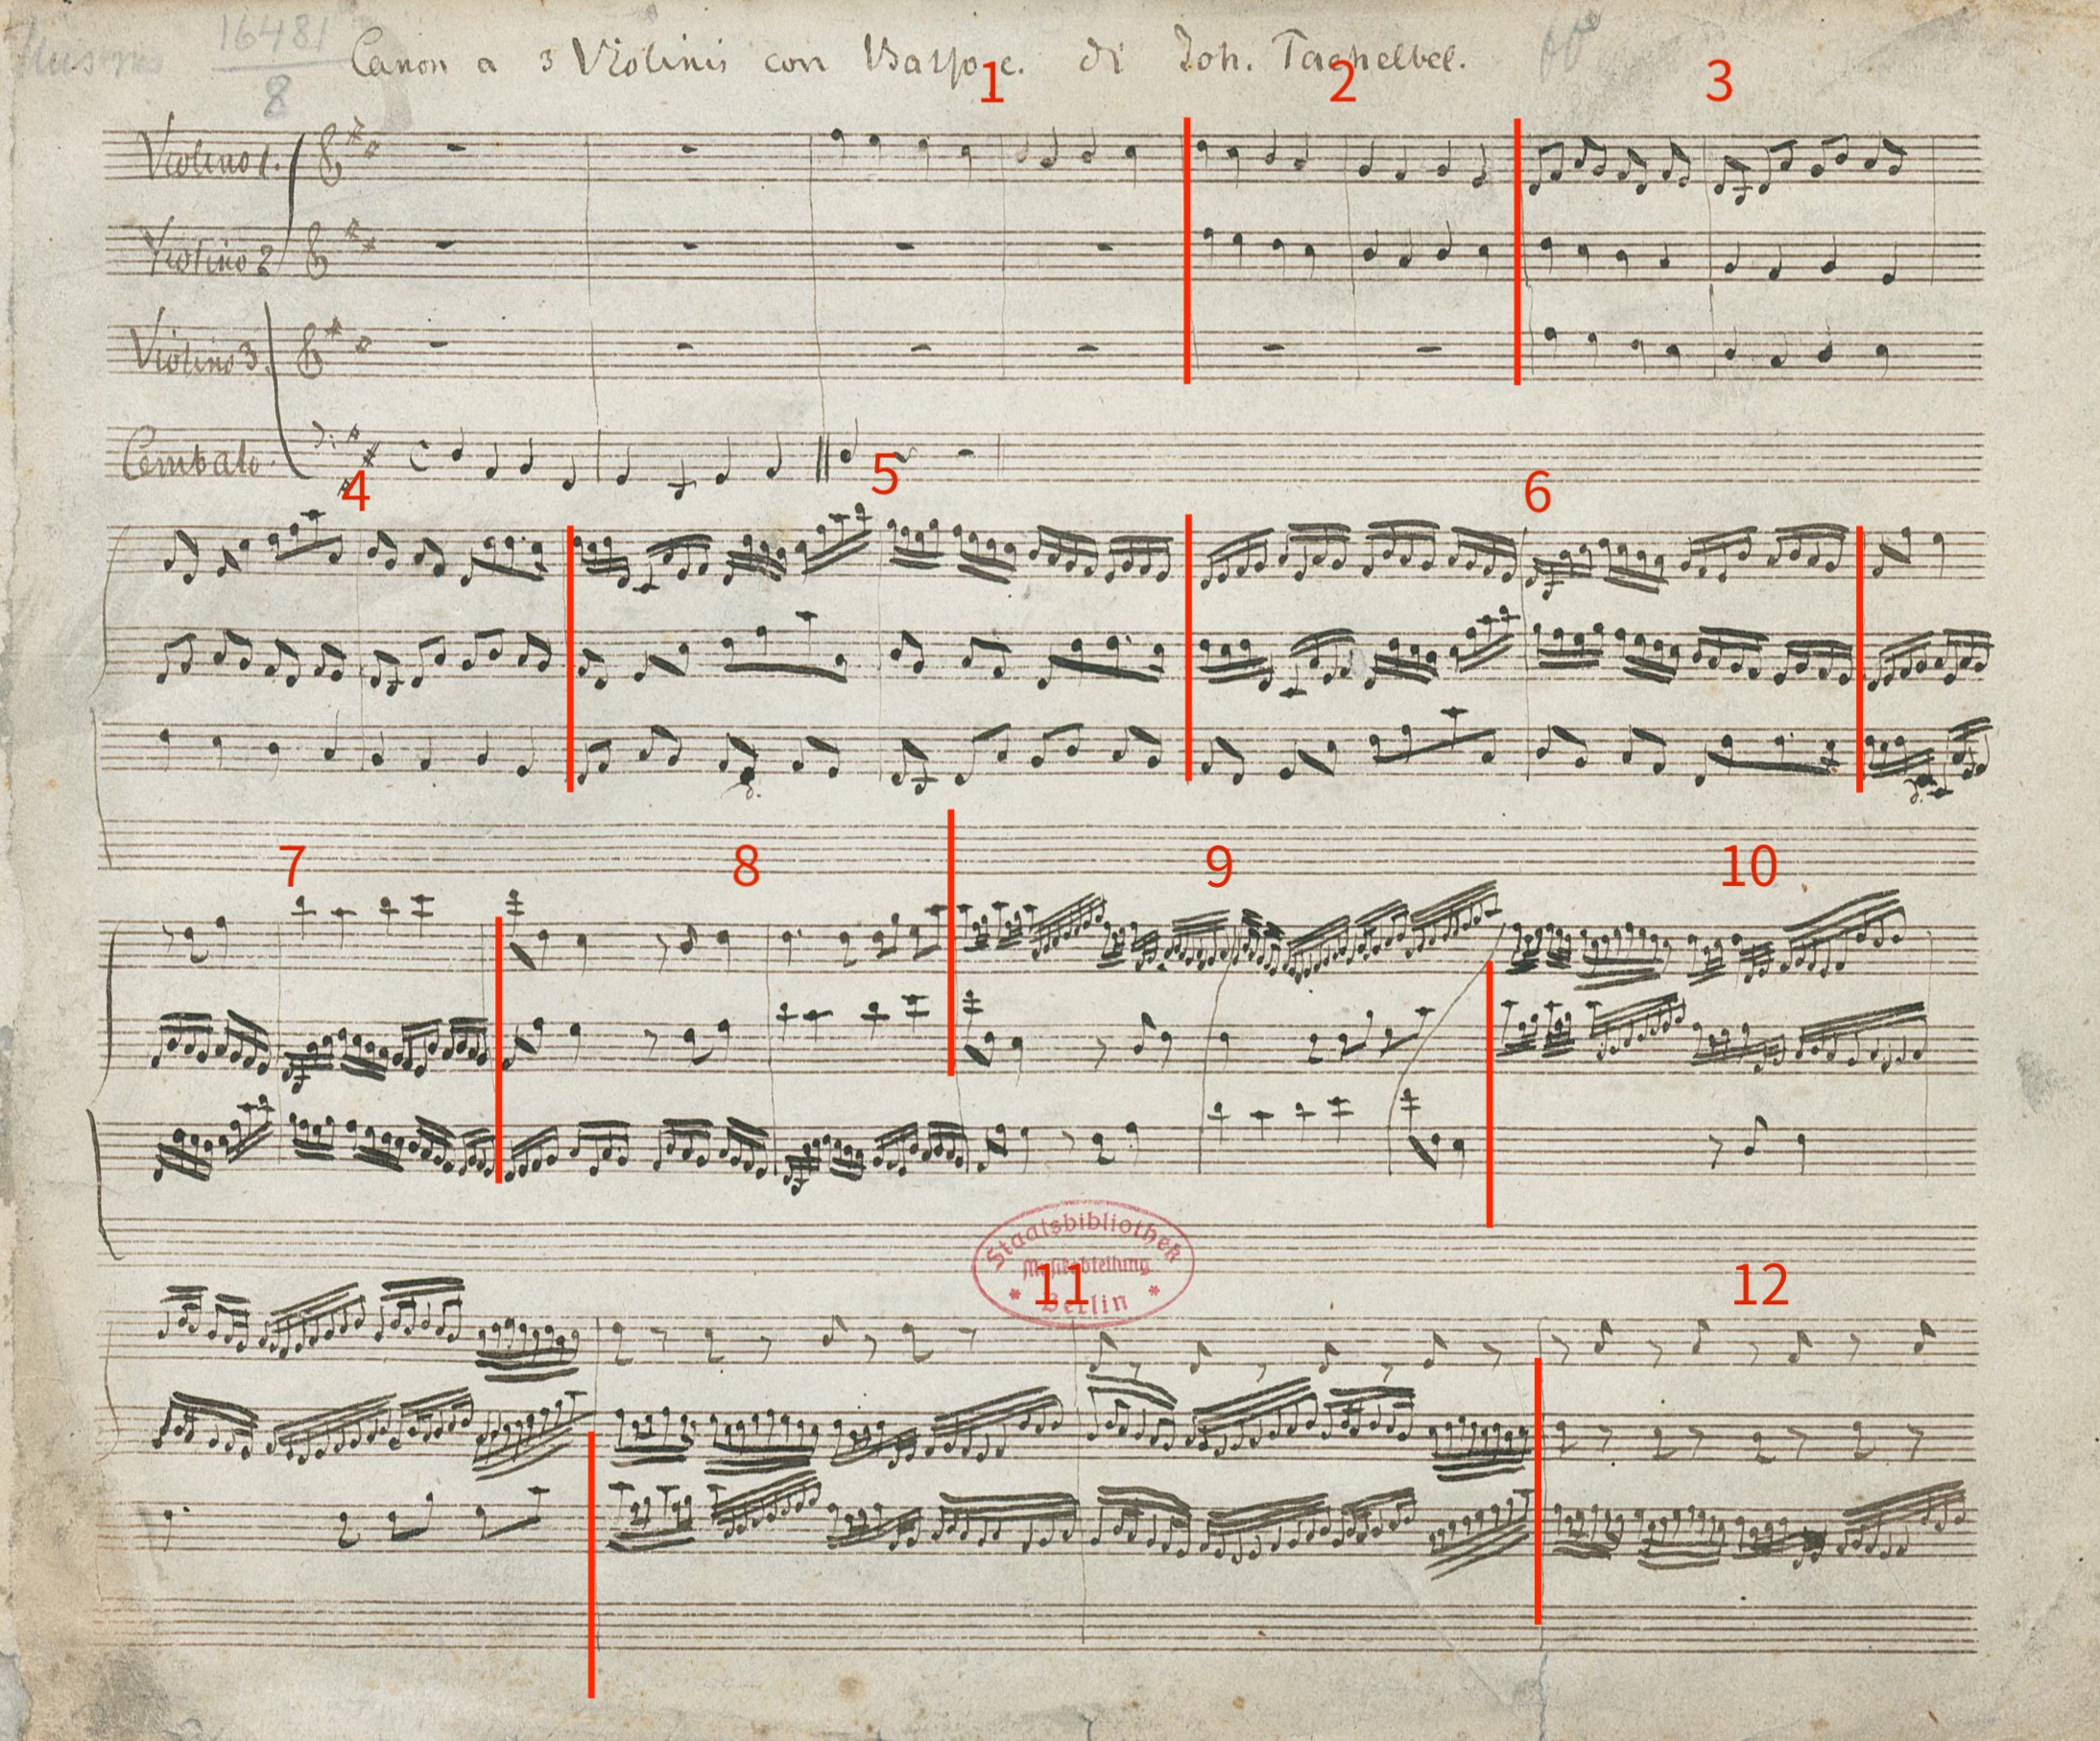 Bach's manuscript